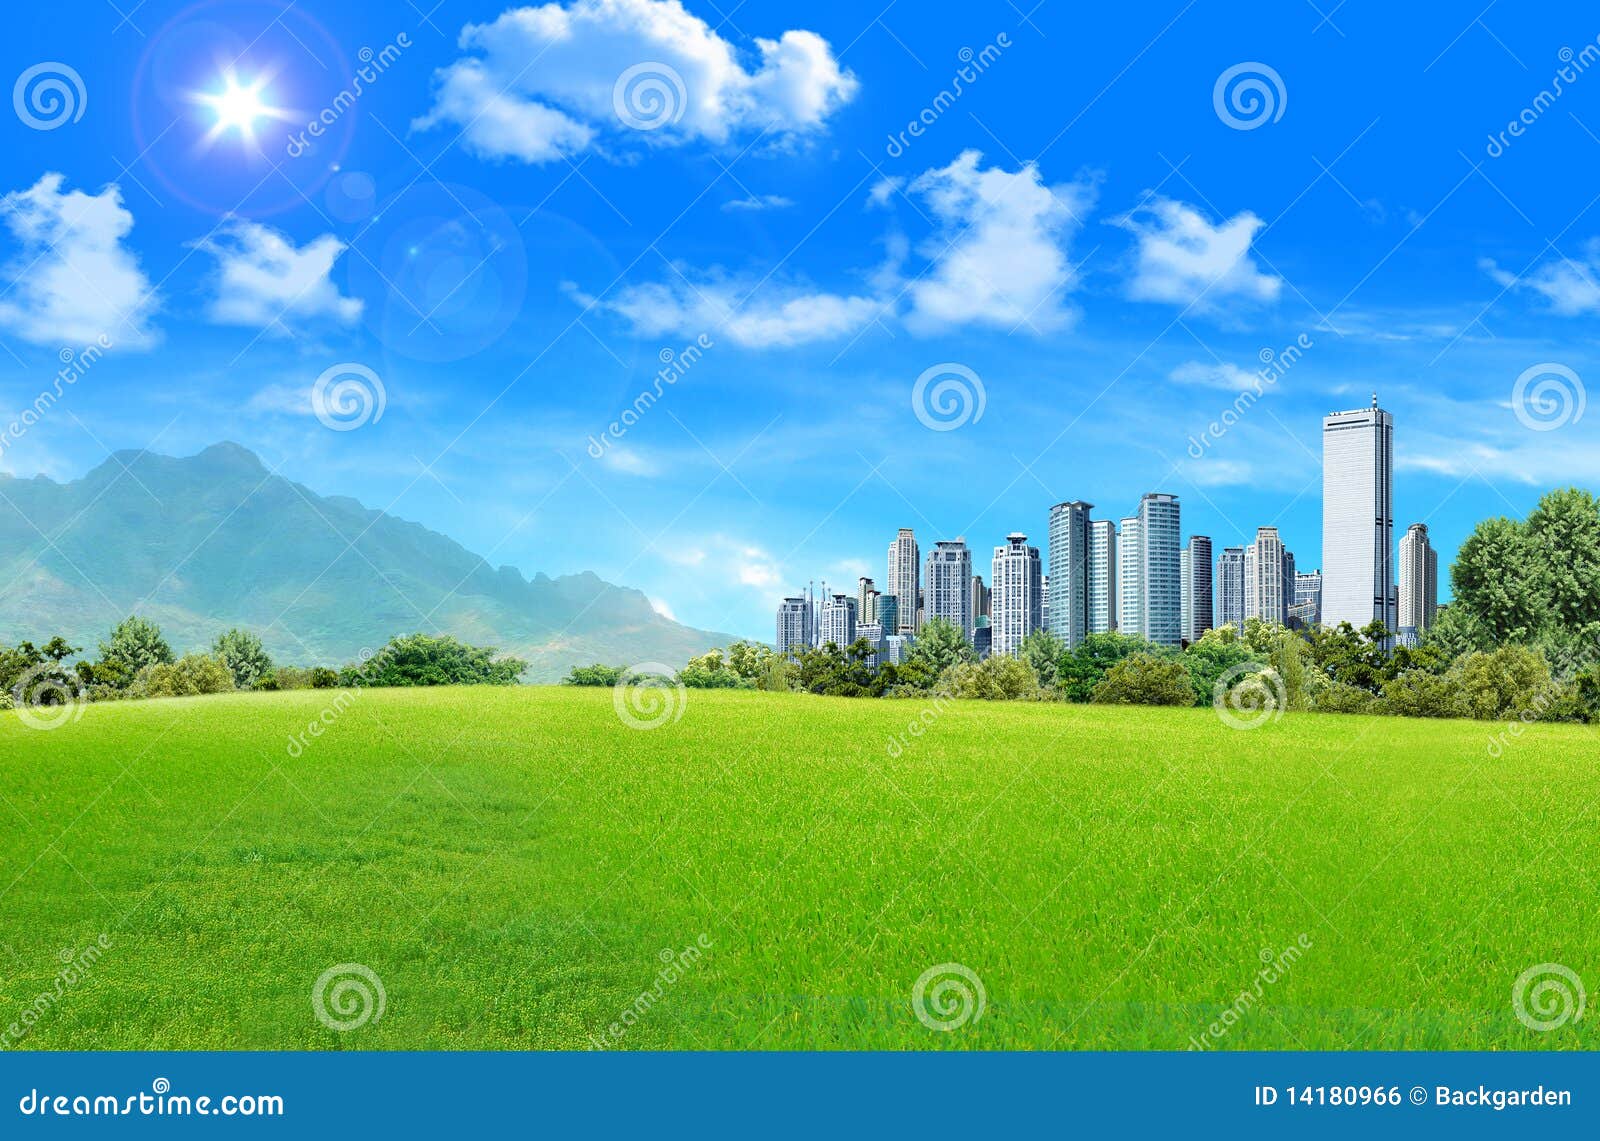 grassland with city